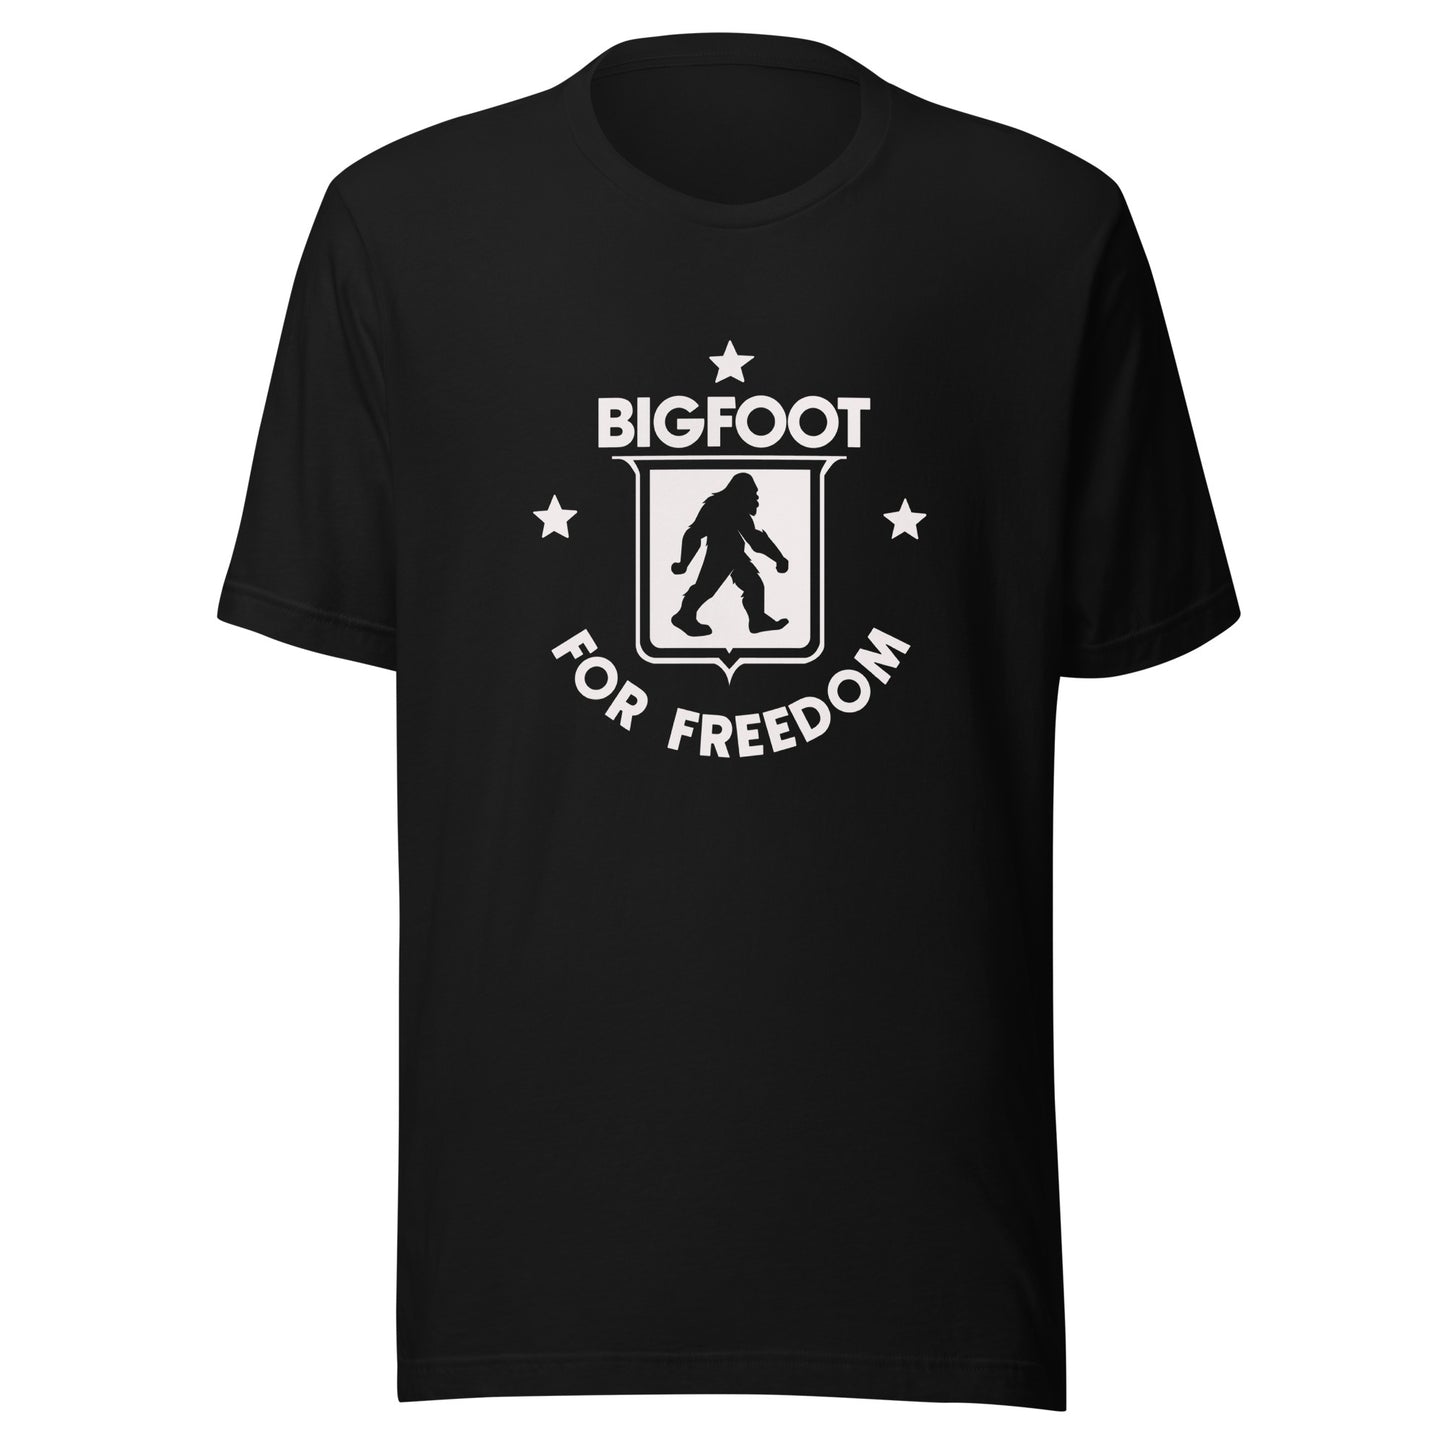 Bigfoot - Unisex t-shirt